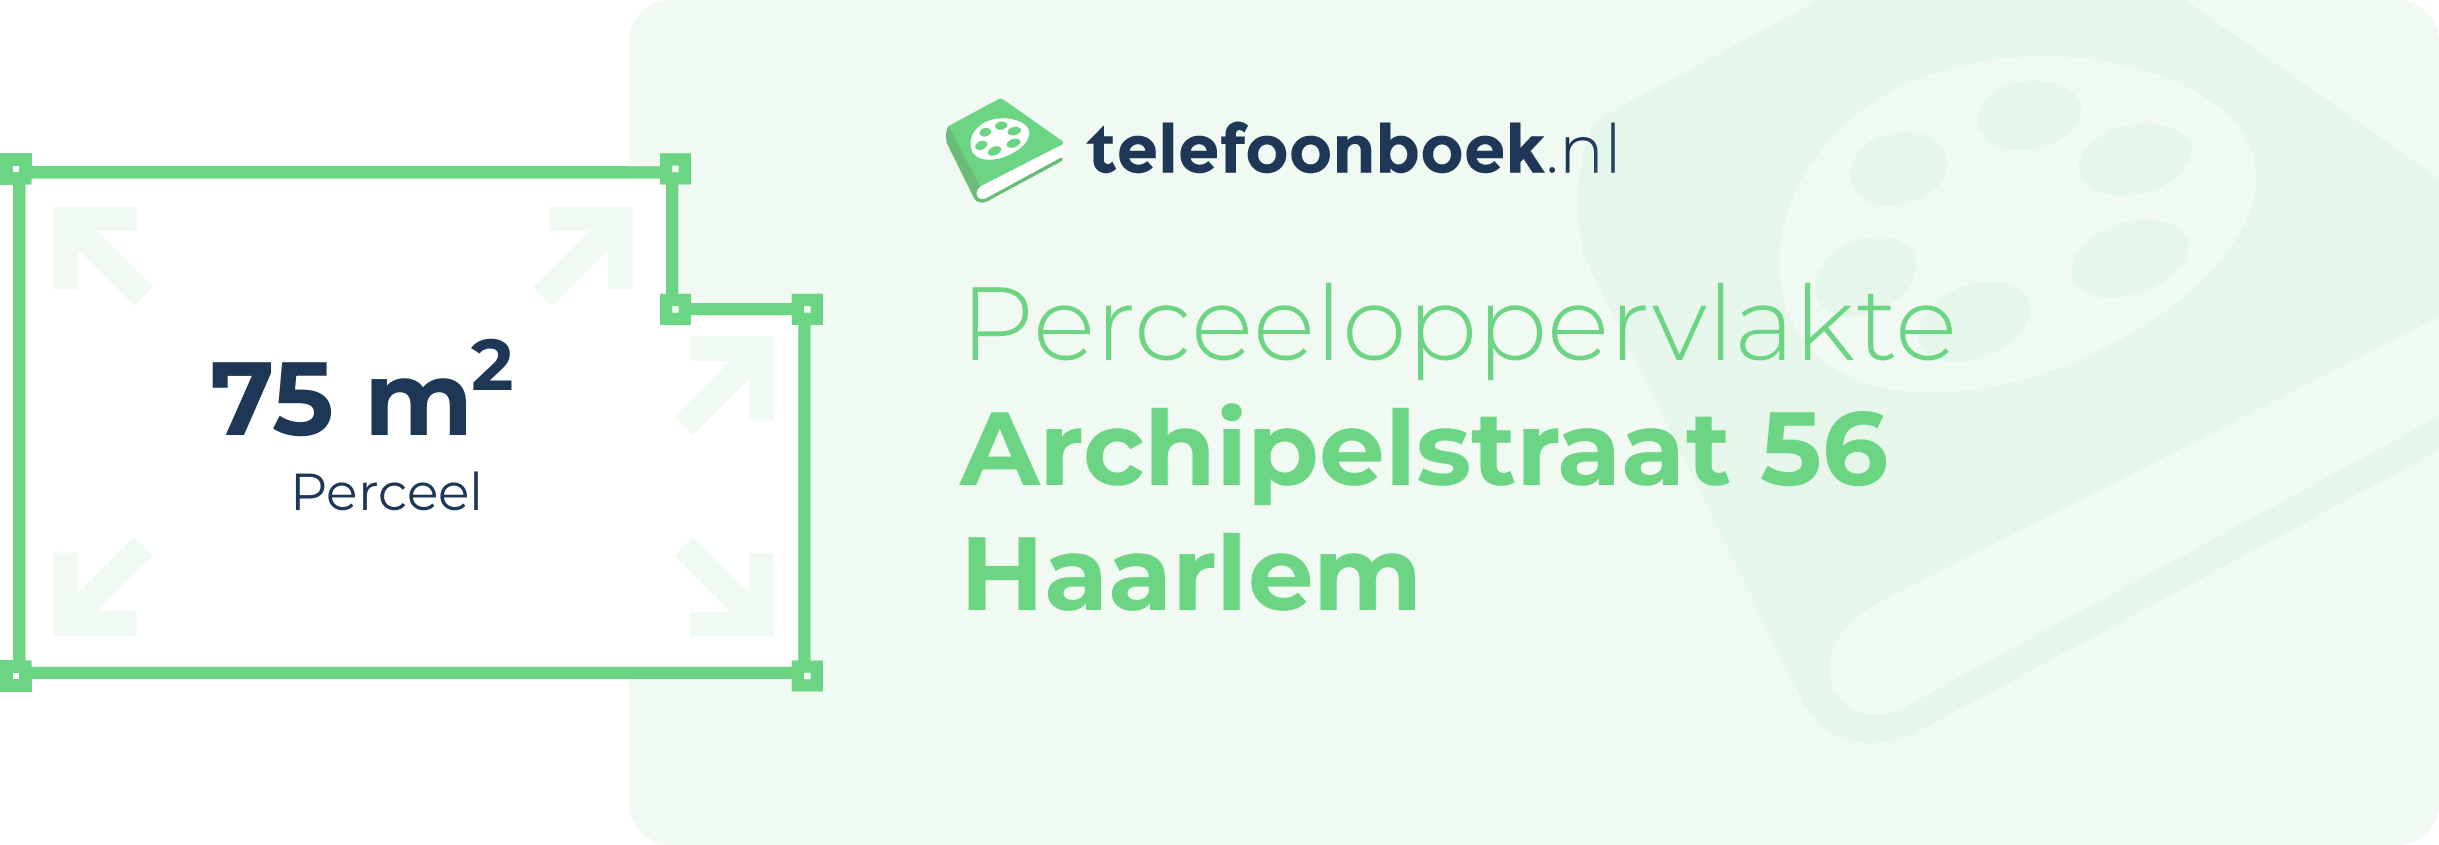 Perceeloppervlakte Archipelstraat 56 Haarlem